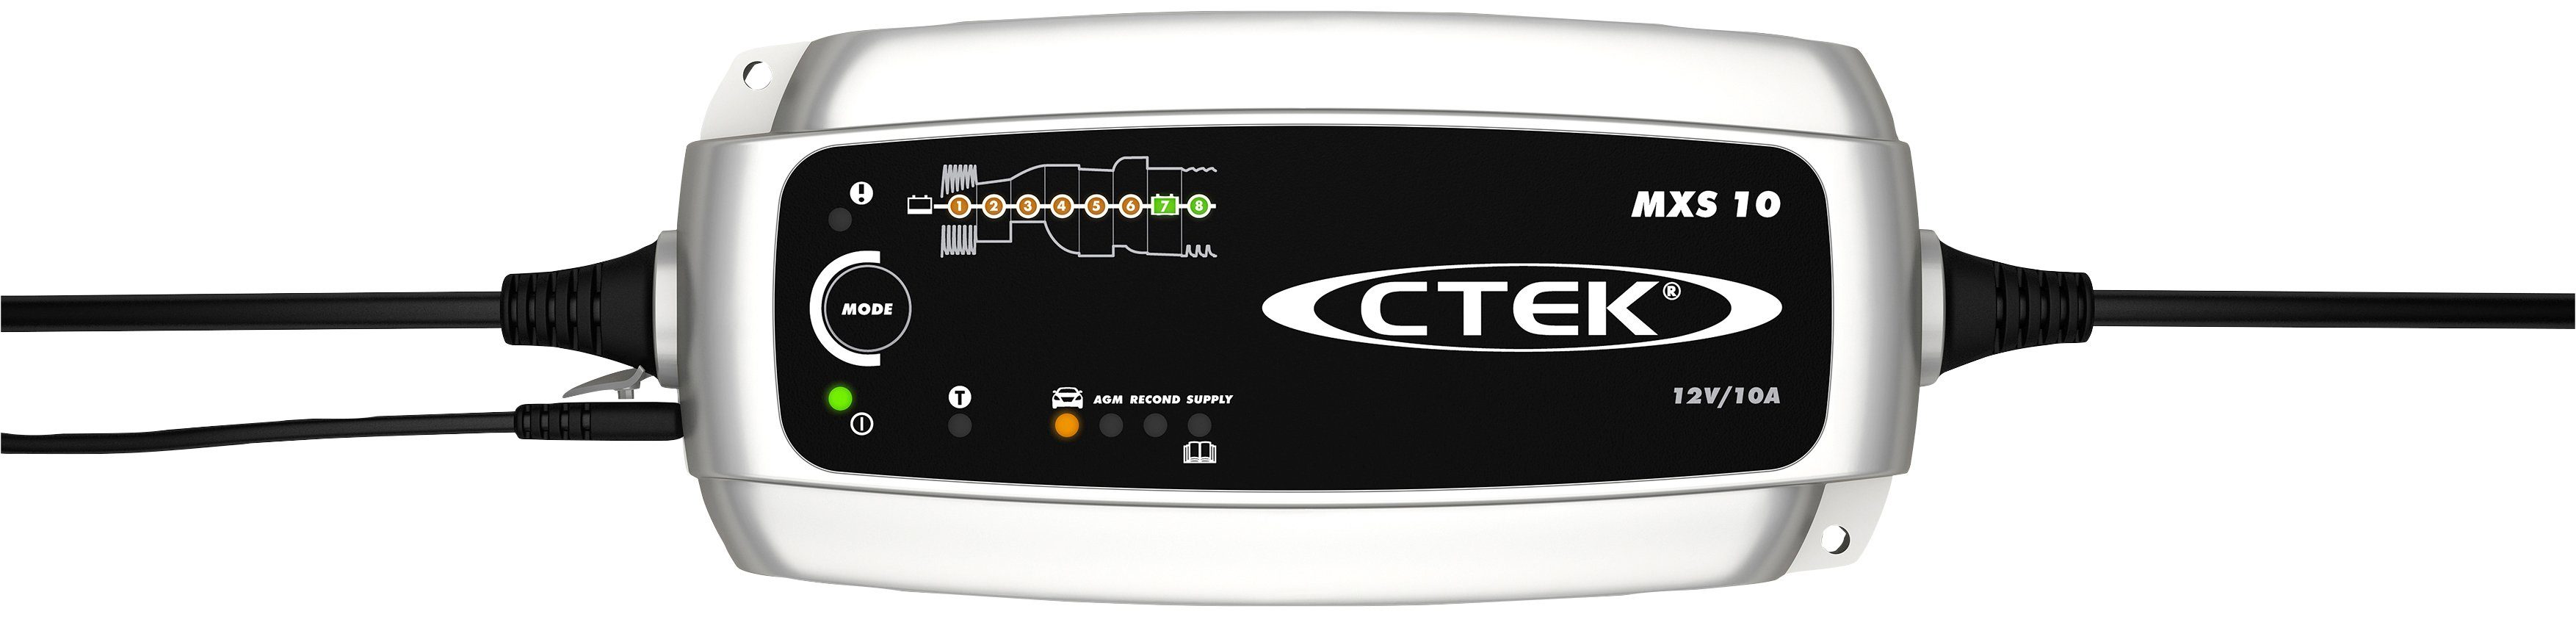 CTEK MXS 10 Batterie-Ladegerät / Supply-Modus) (Versorgungsprogramm